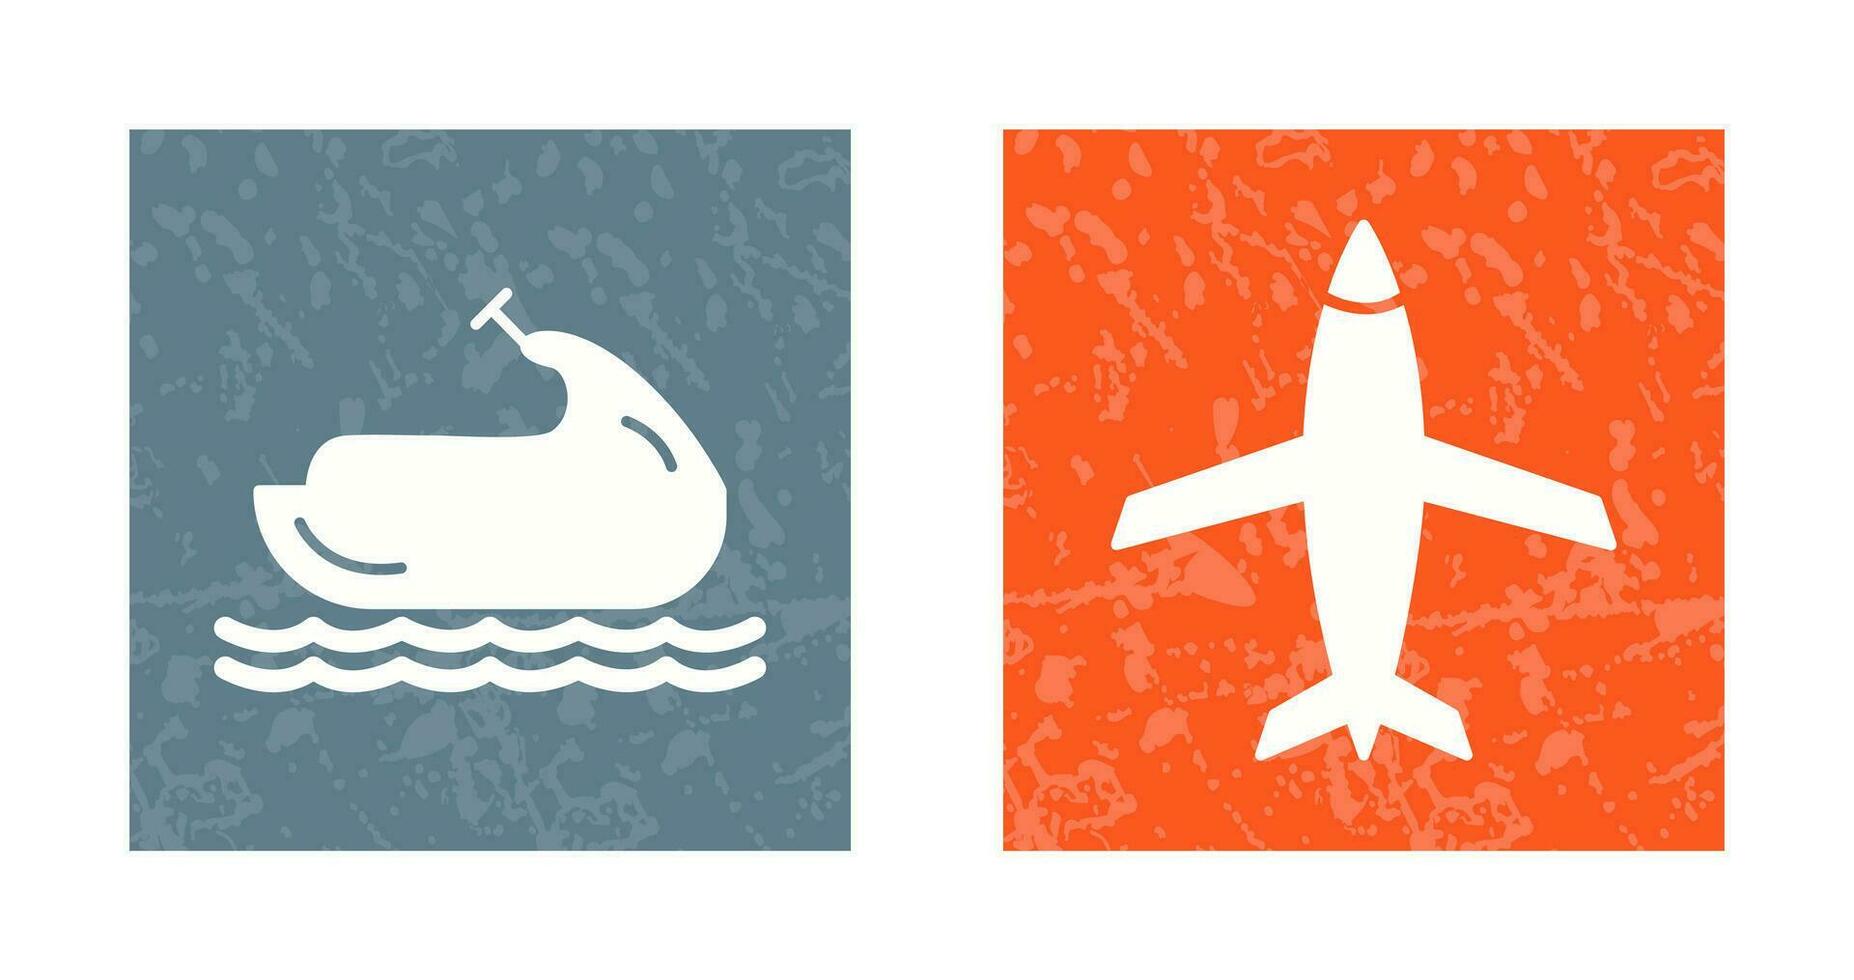 Jet Ski and Plane Icon vector